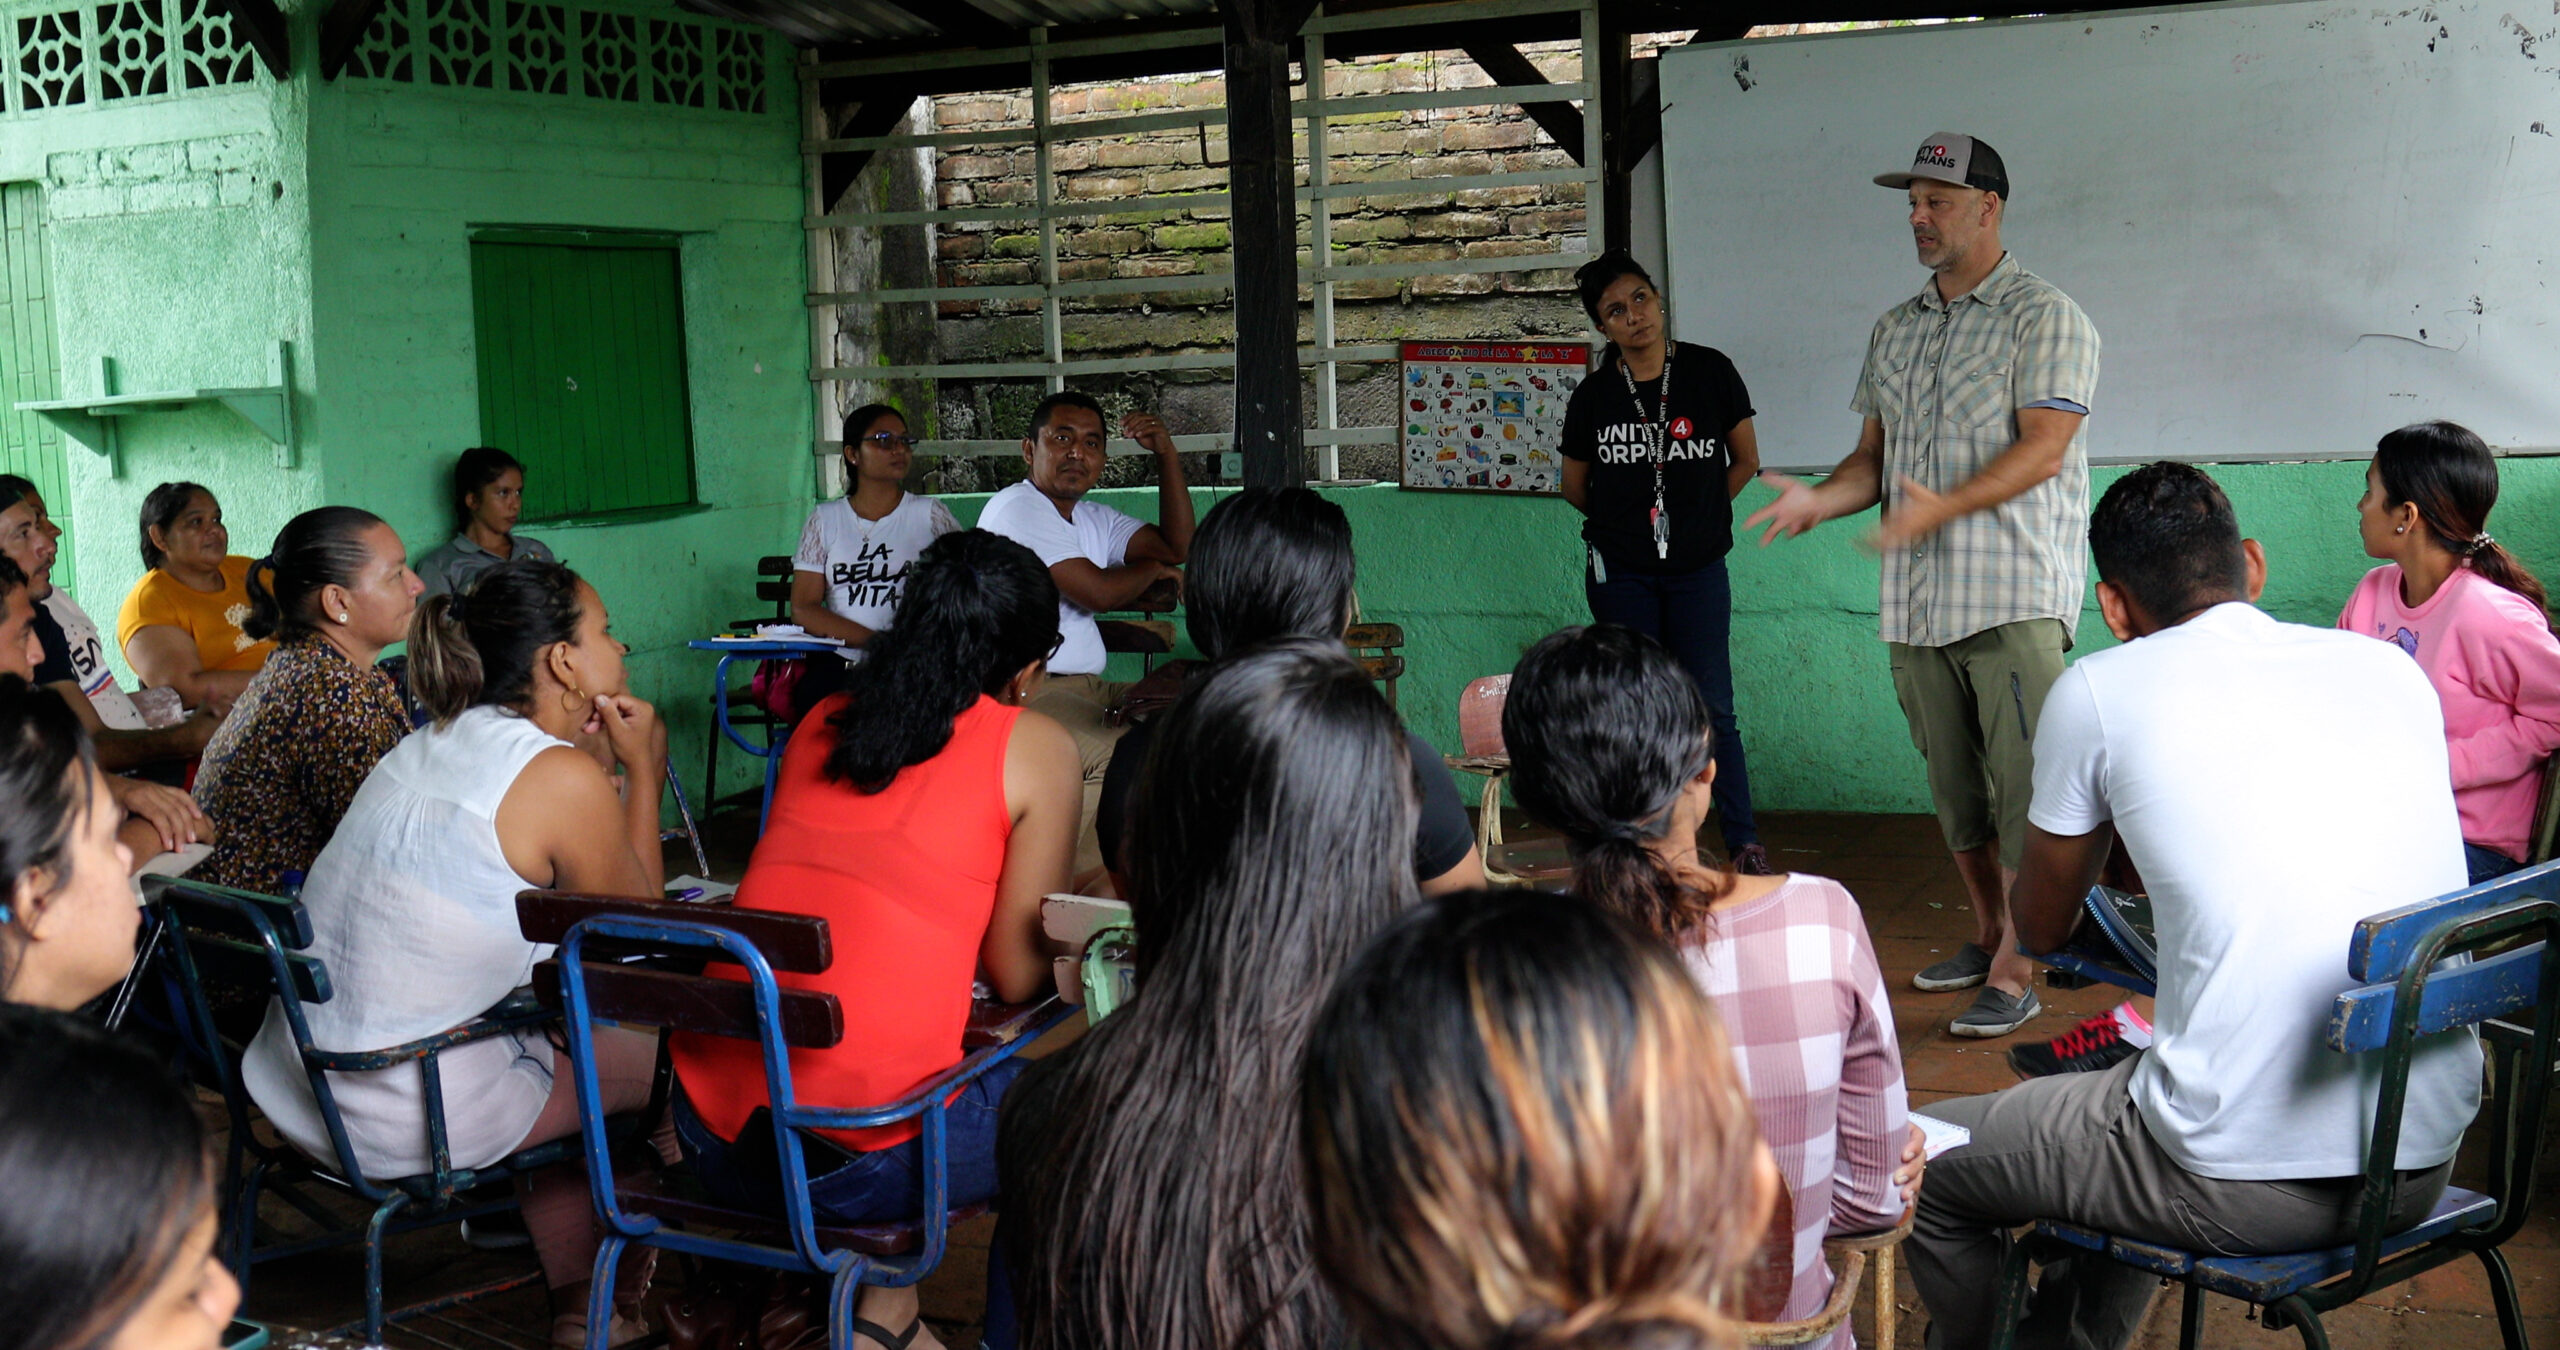 San Diego Charity Unity 4 Orphans' Joe Brandi speaking to ESL teachers in Miramar, Nicaragua